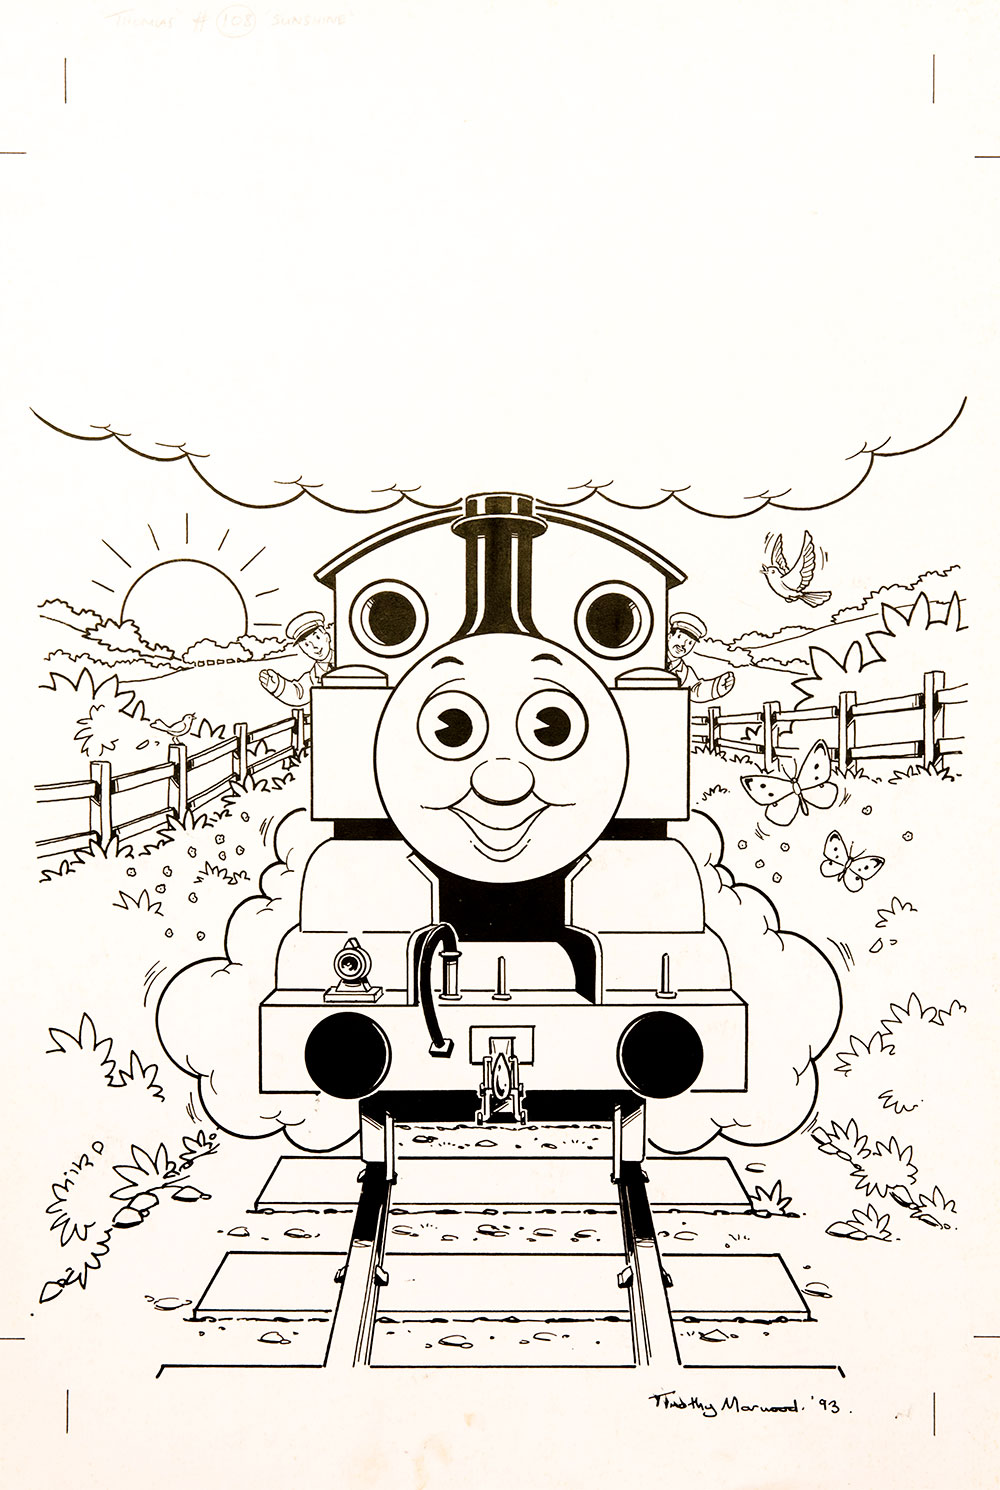 Sunshine (1993) - Thomas the Tank Engine [070/160]